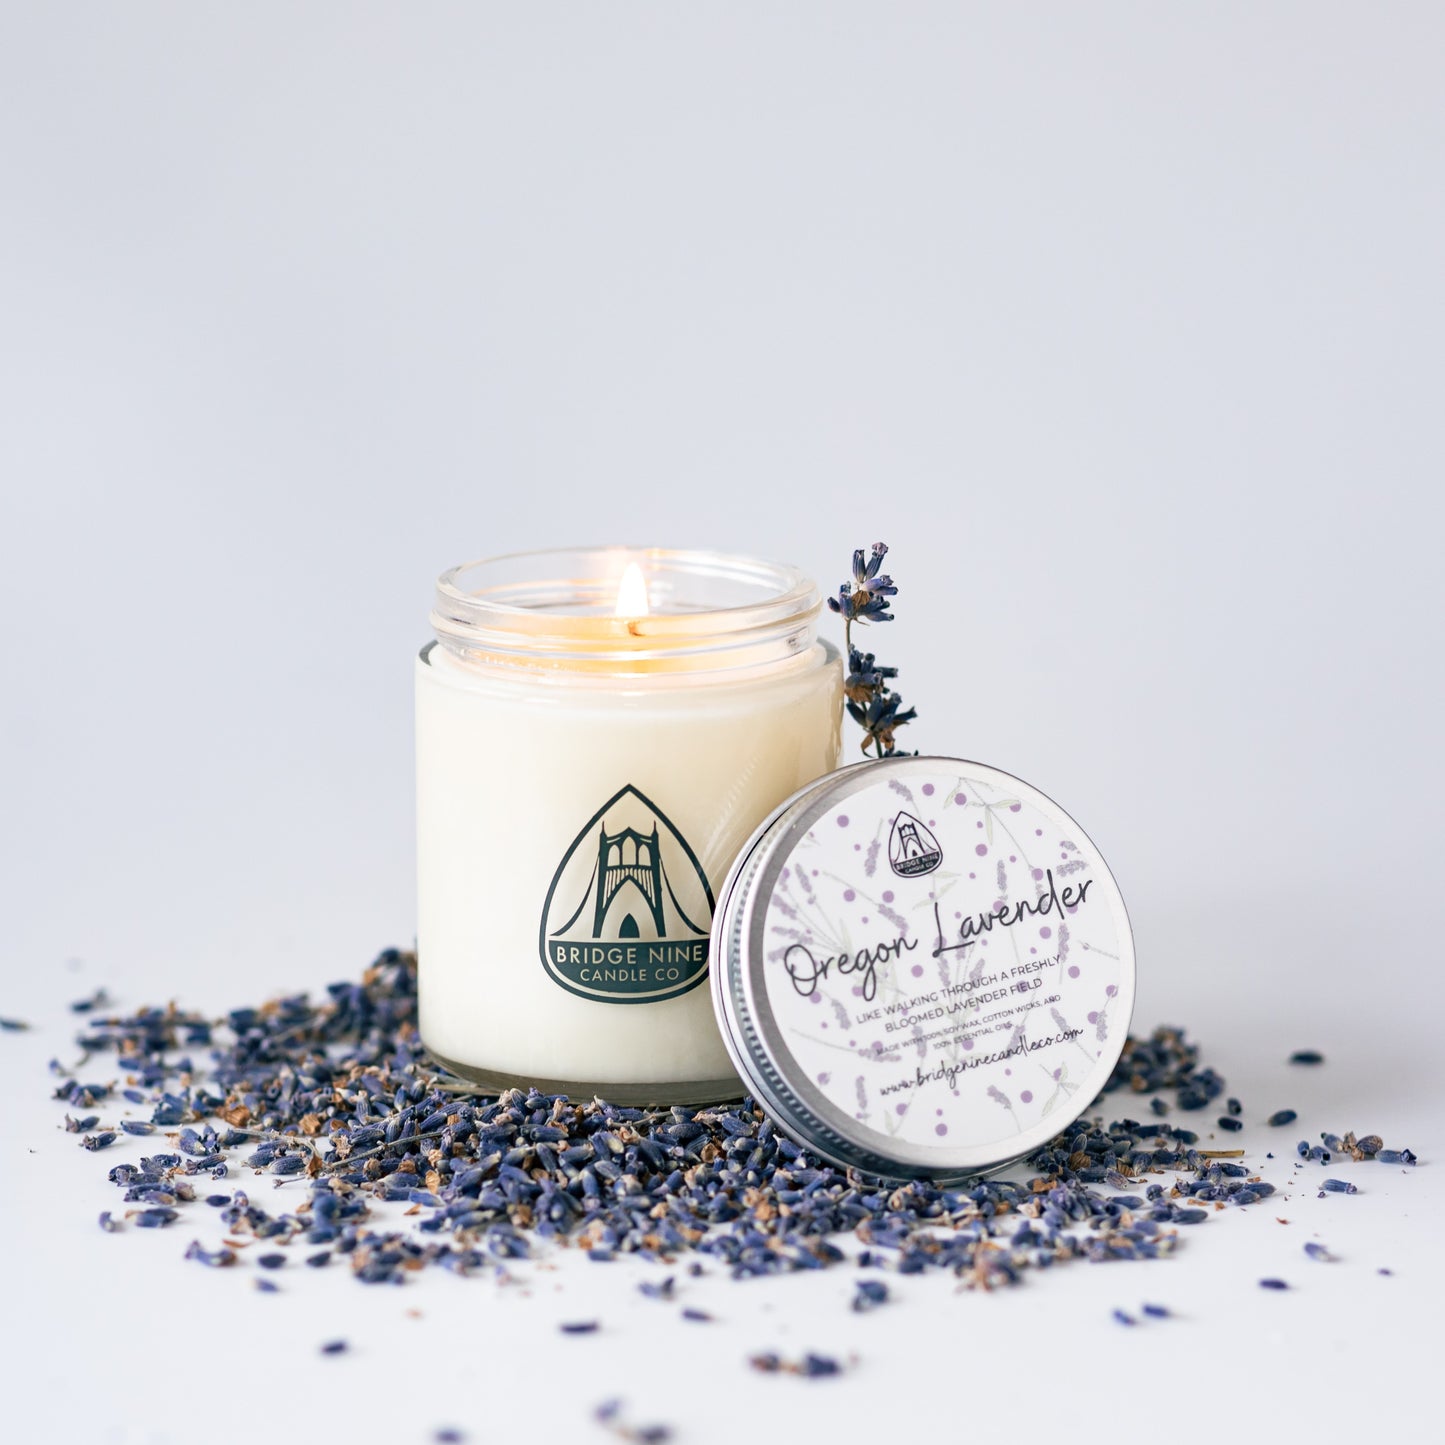 Oregon Lavender Small Jar